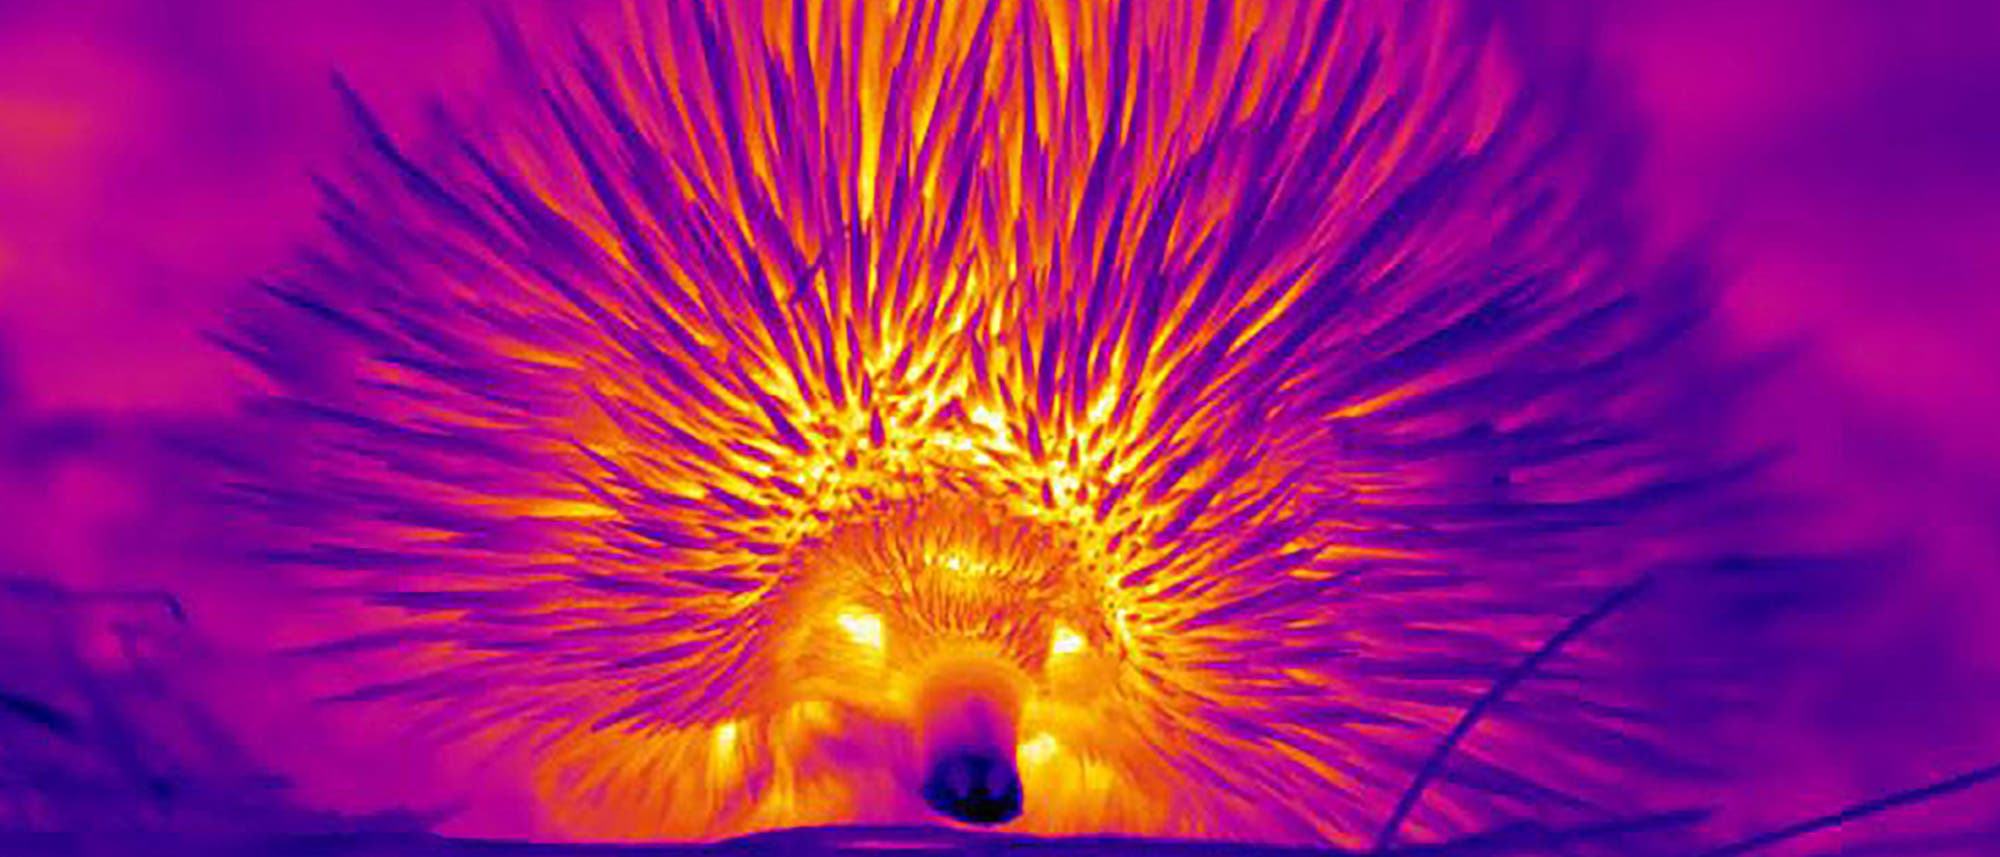 Wärmebild eines Kurzschnabeligels